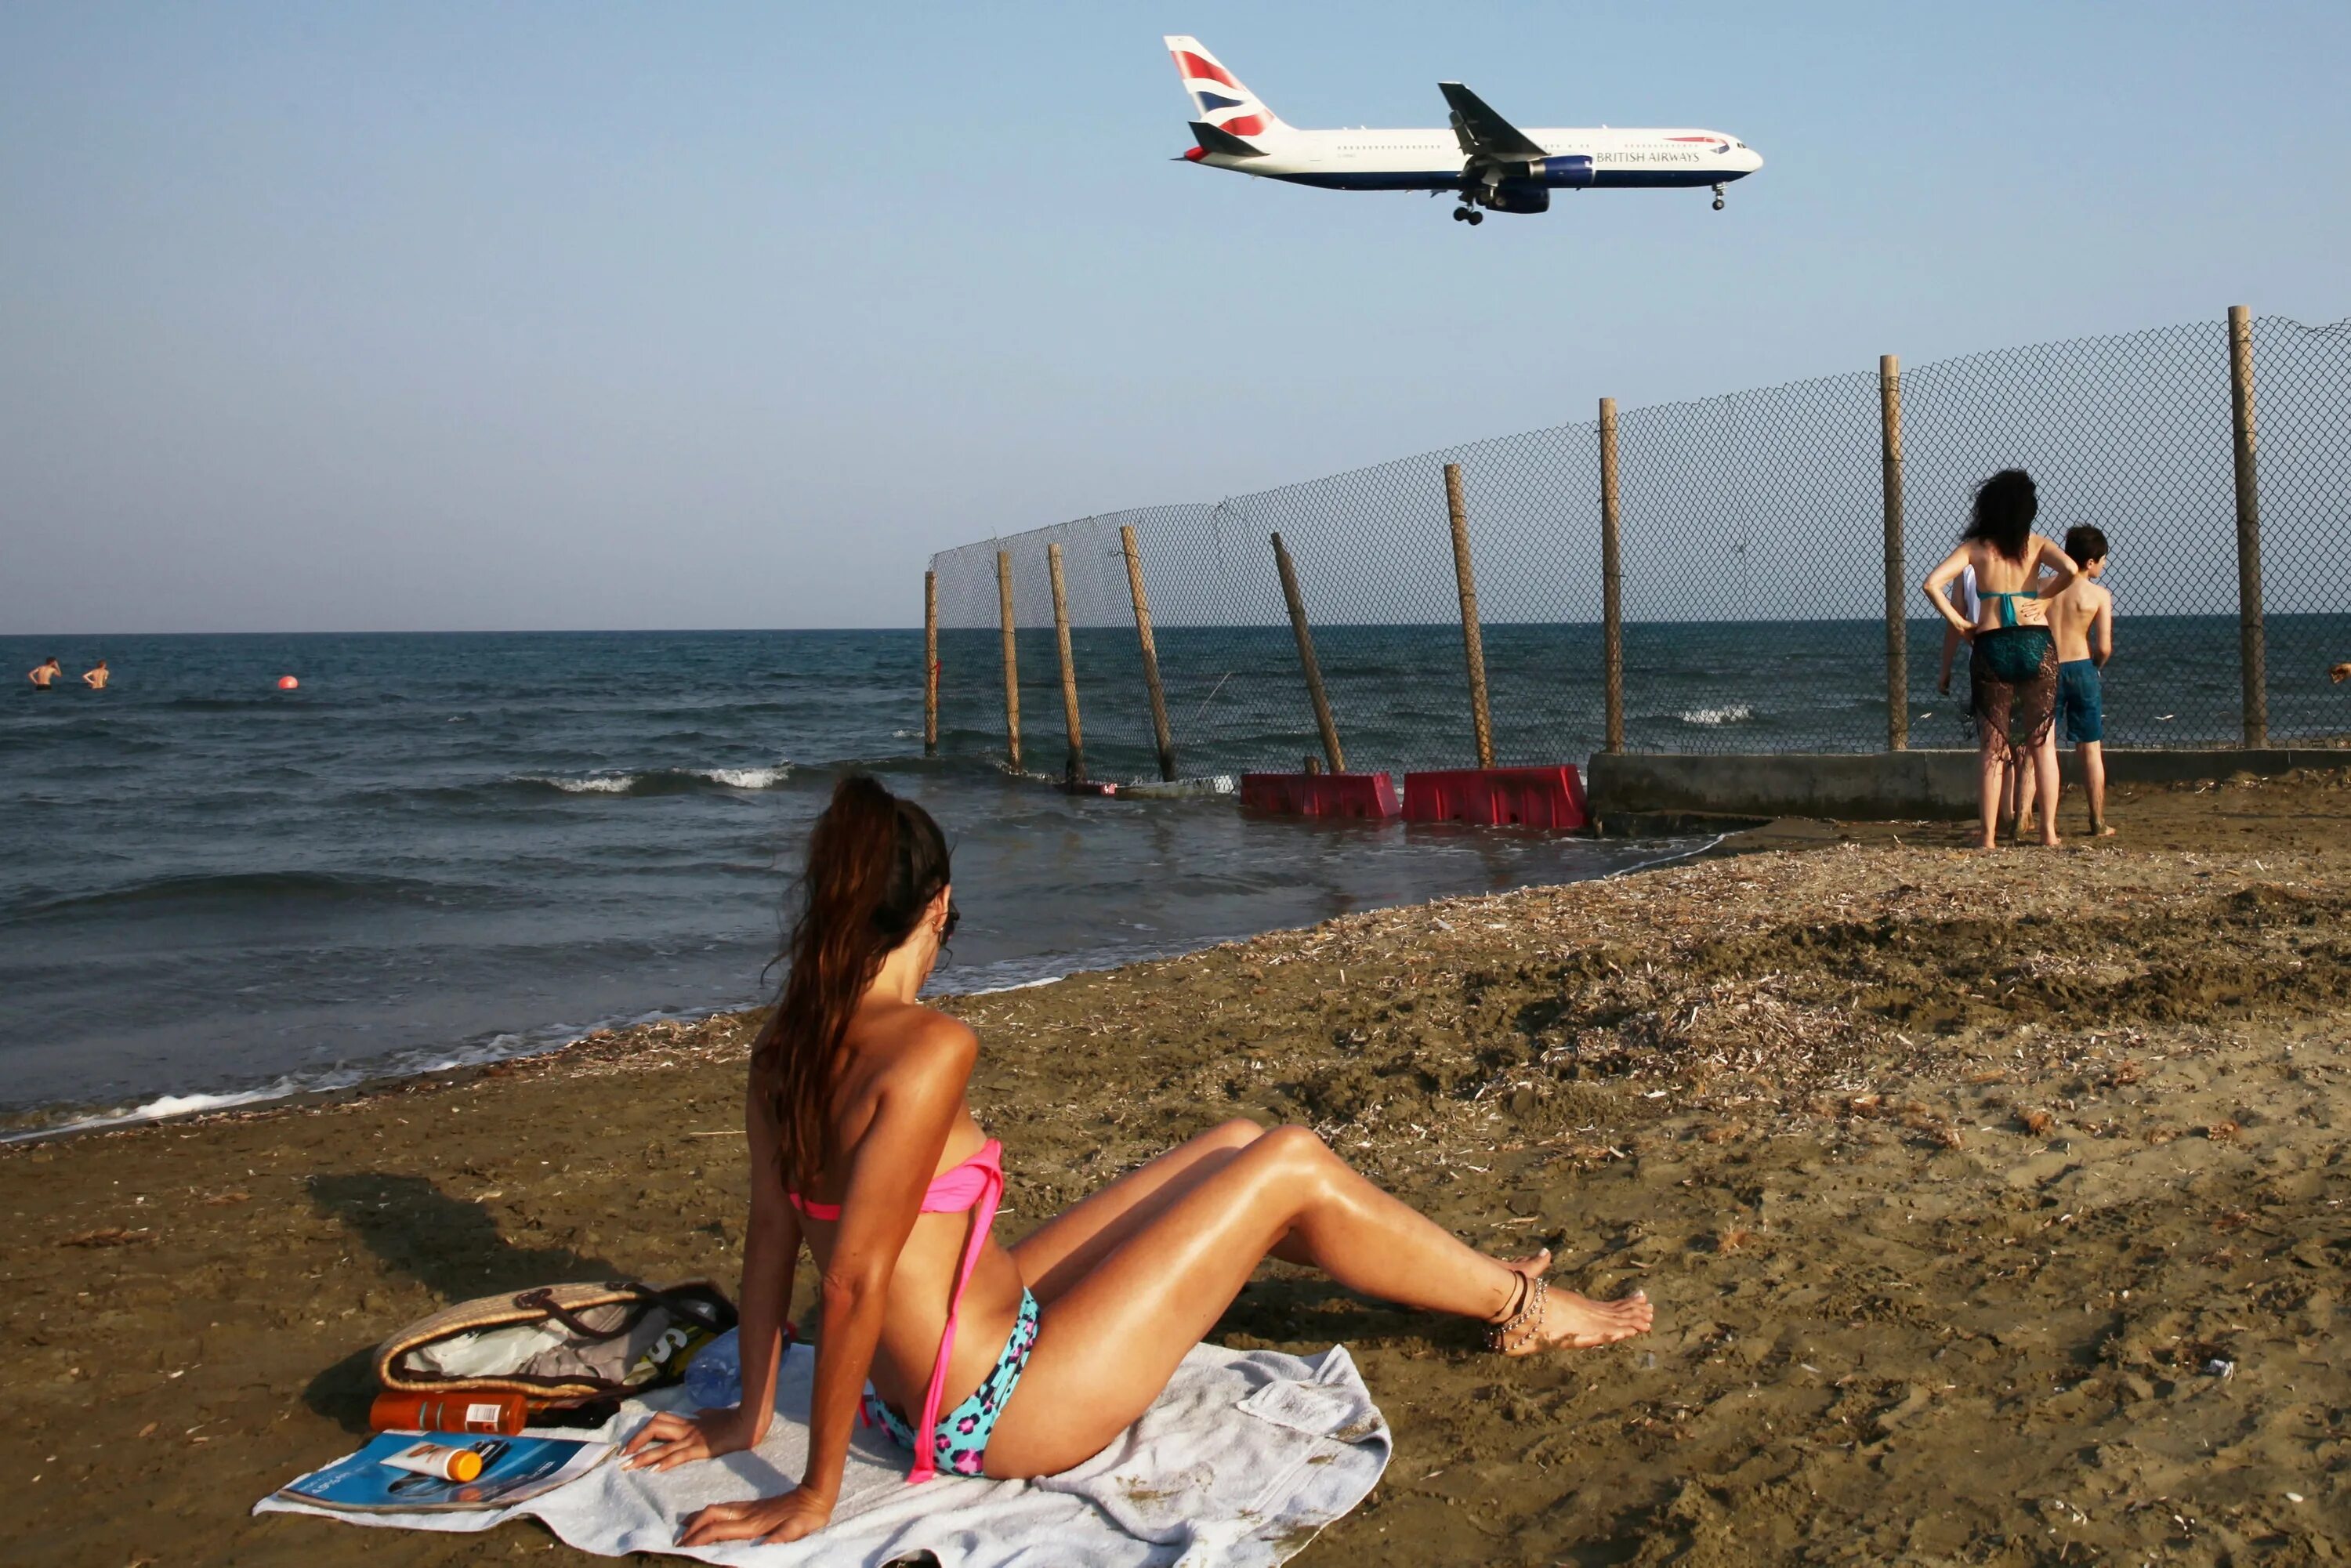 На самолете на море россия. Адлер пляж самолет. Пляж с самолетами. Аэропорт на пляже. Адлер самолеты над пляжем.